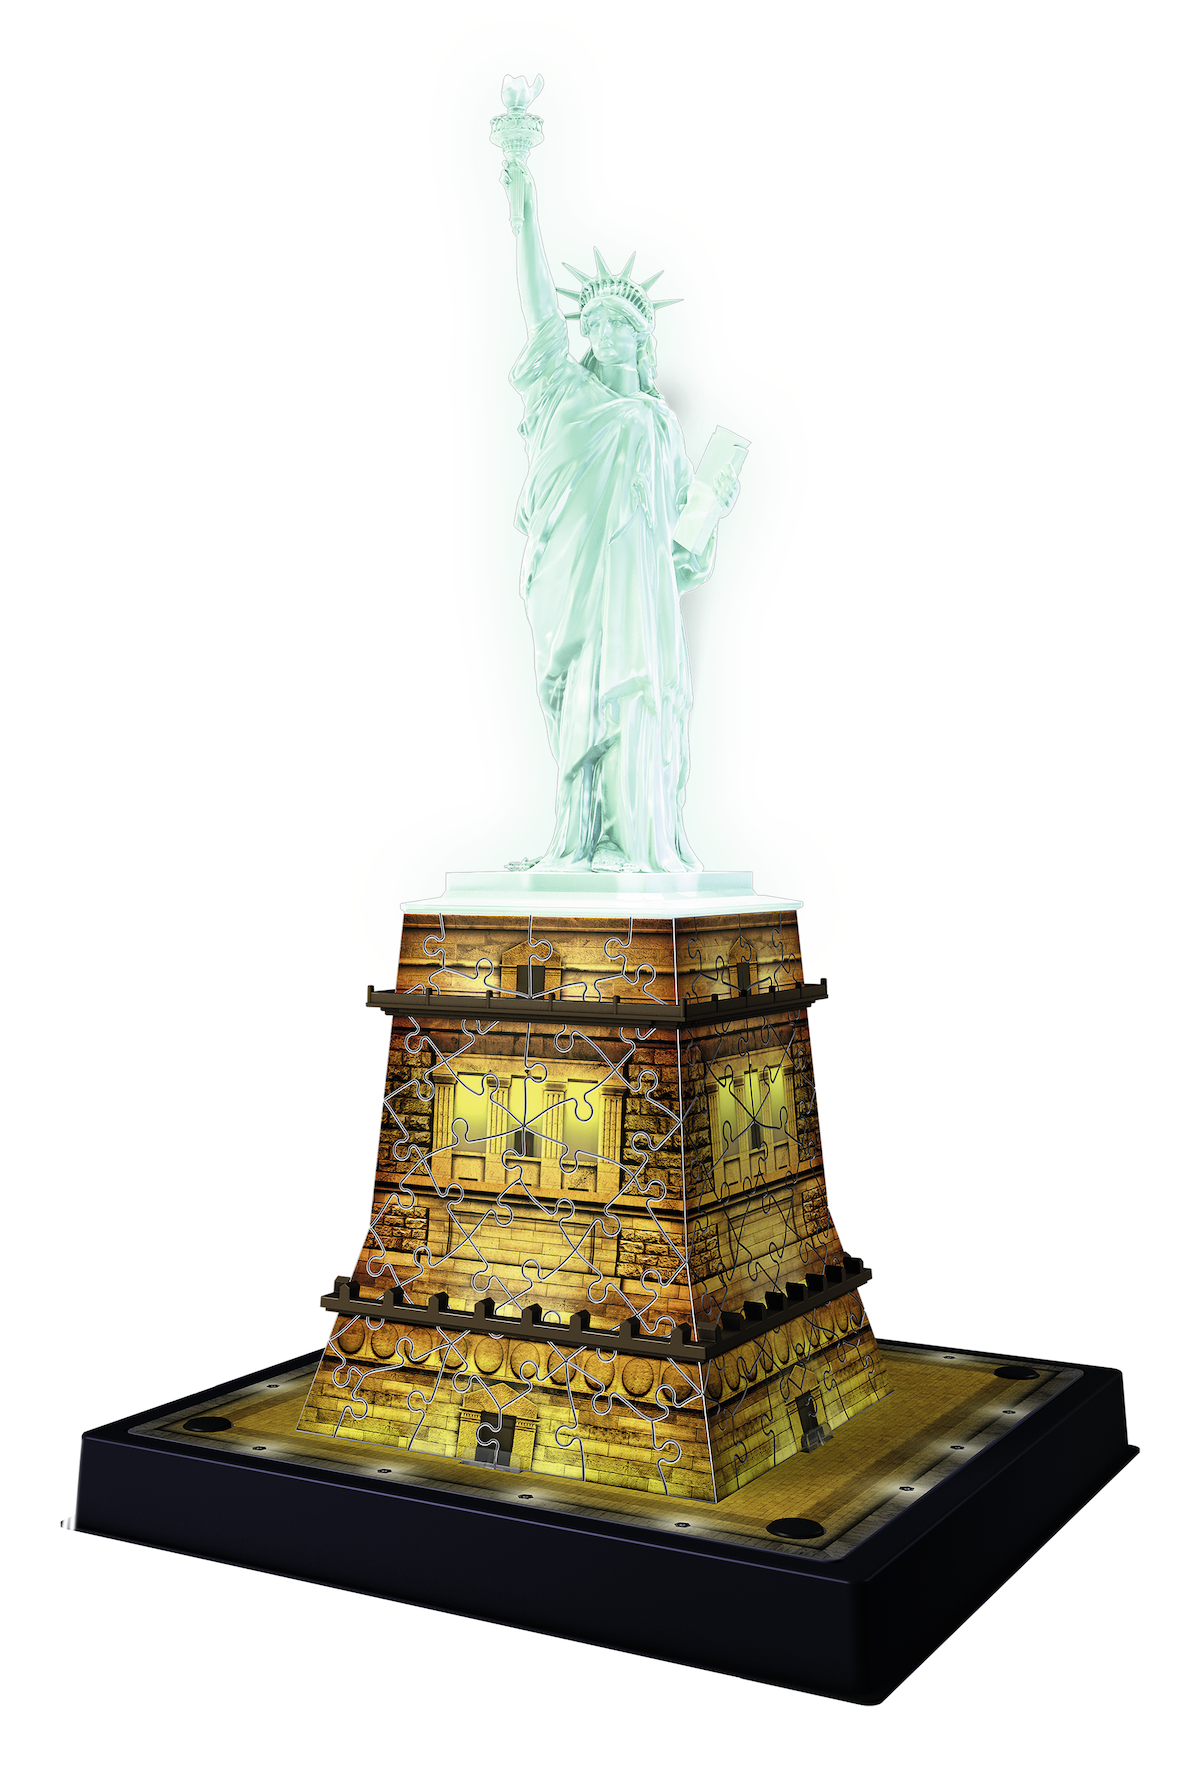 Ravensburger - 3d puzzle statua della liberta' night edition, londra, 216 pezzi, 10+ anni - RAVENSBURGER, RAVENSBURGER 3D PUZZLE